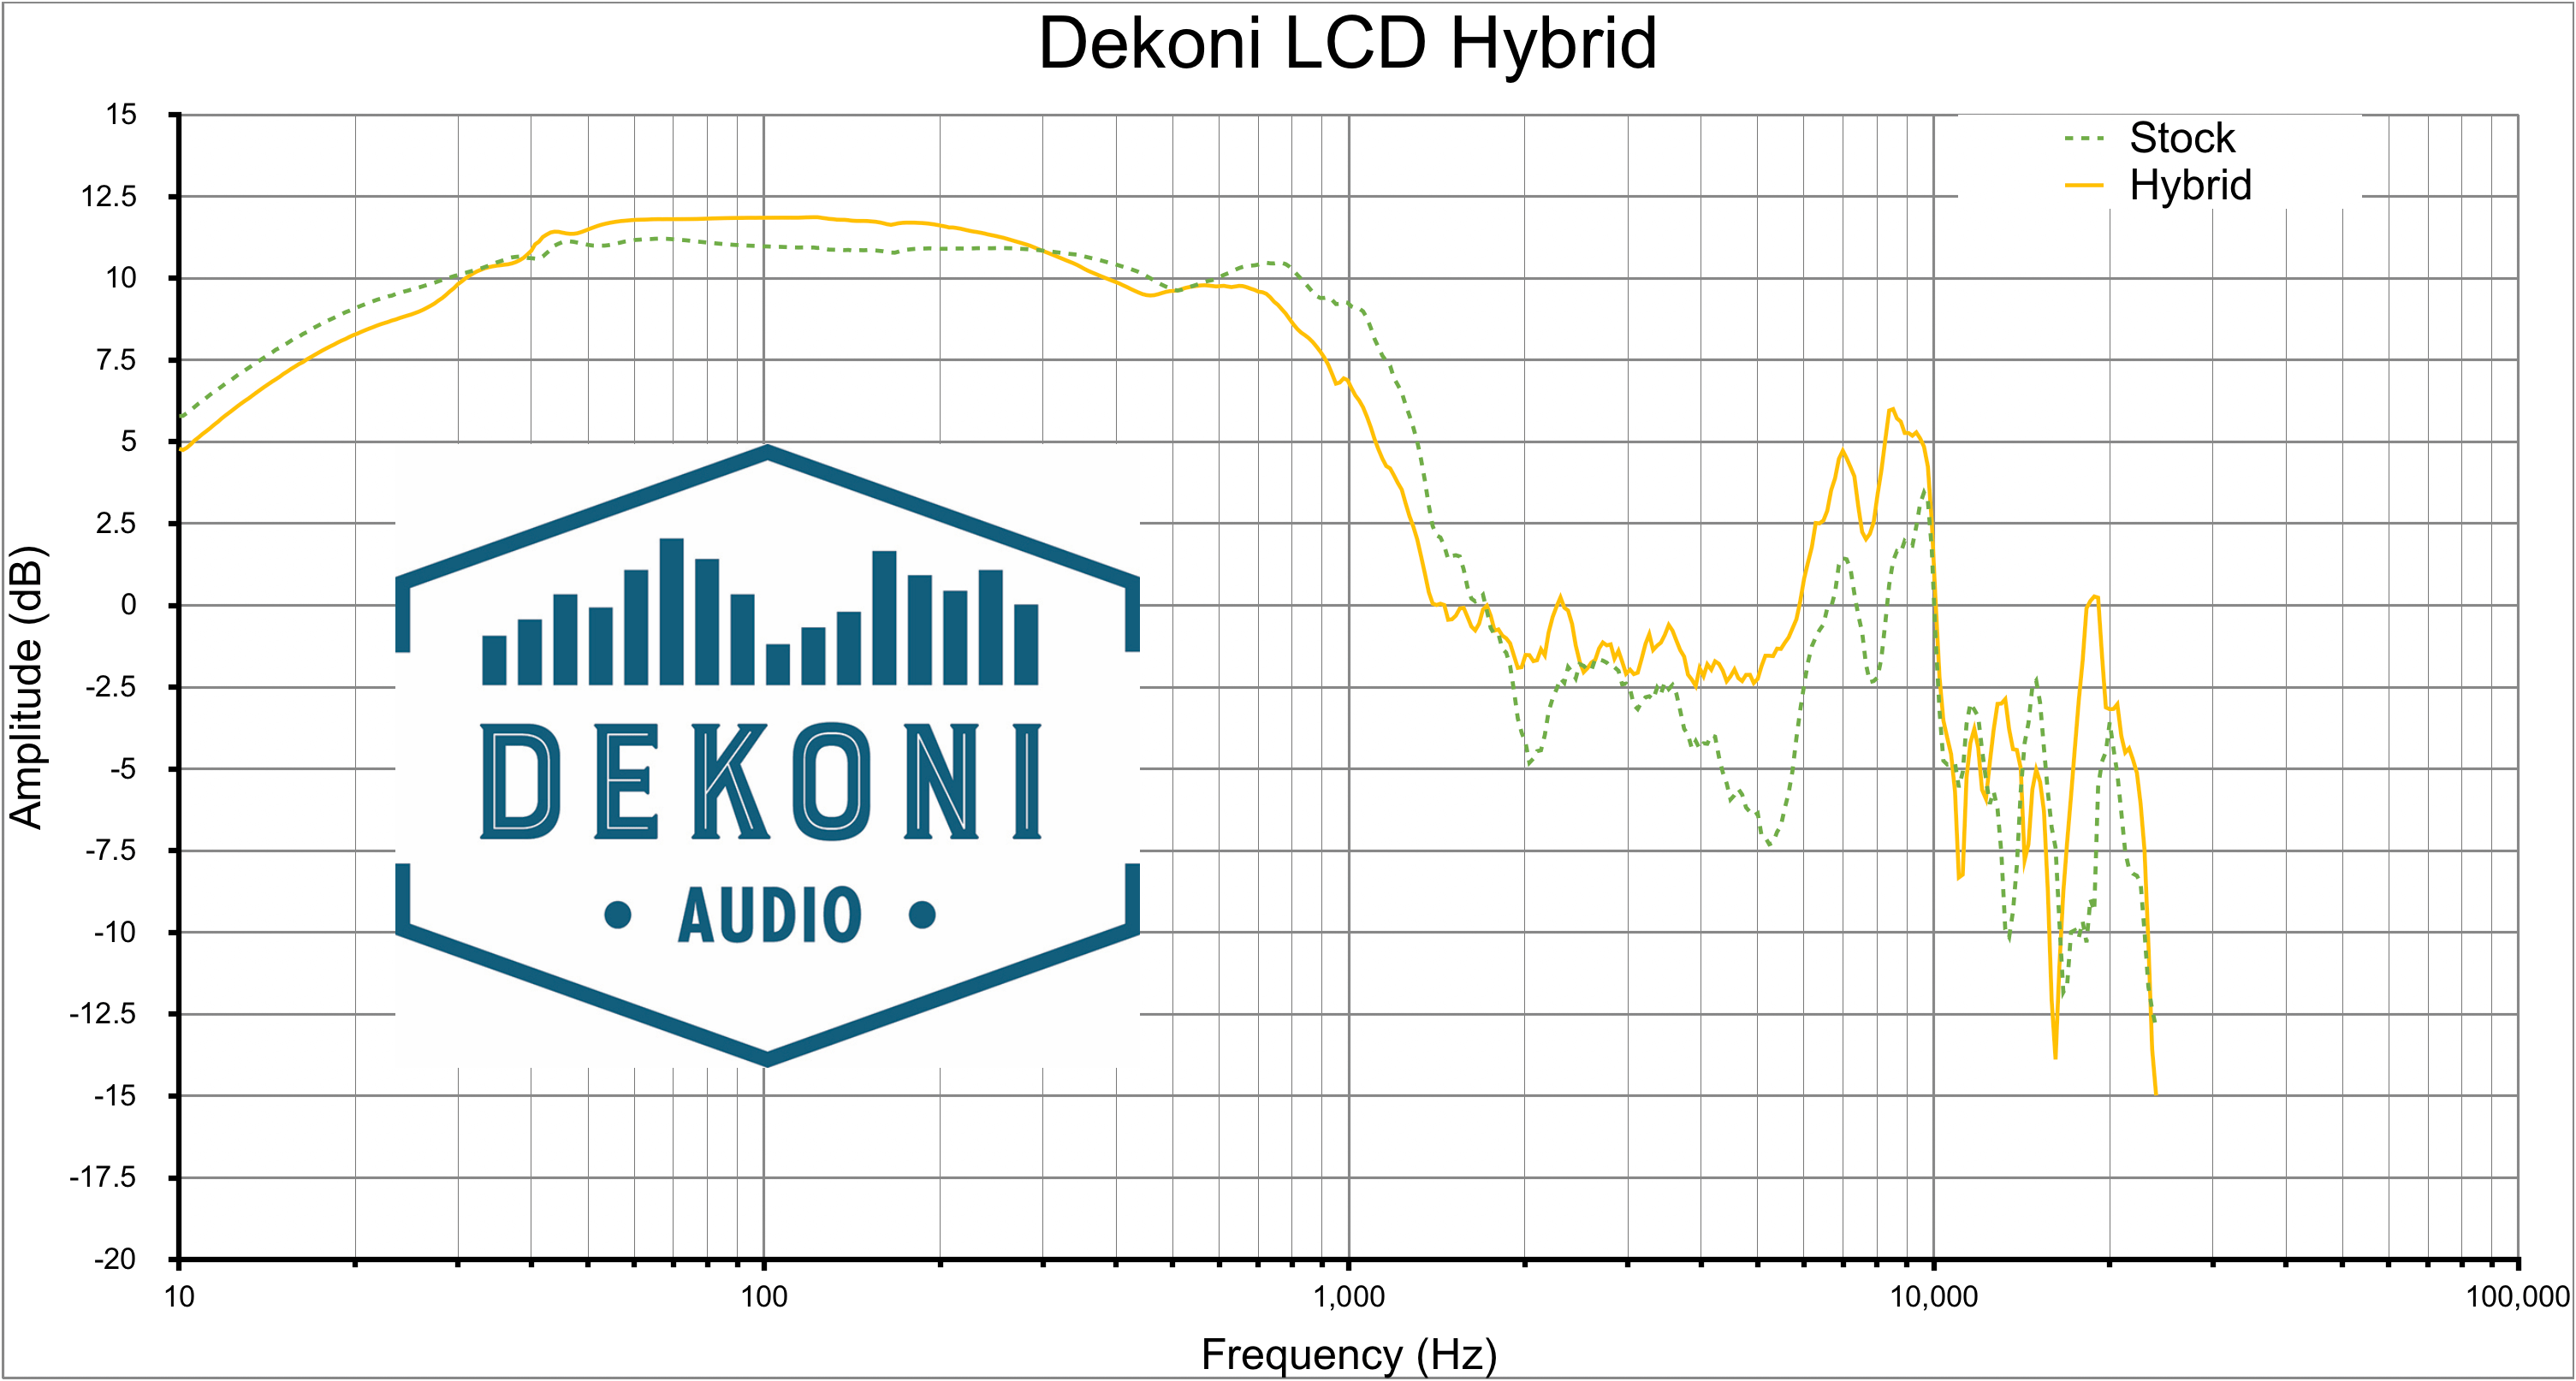 LCD Hybrid